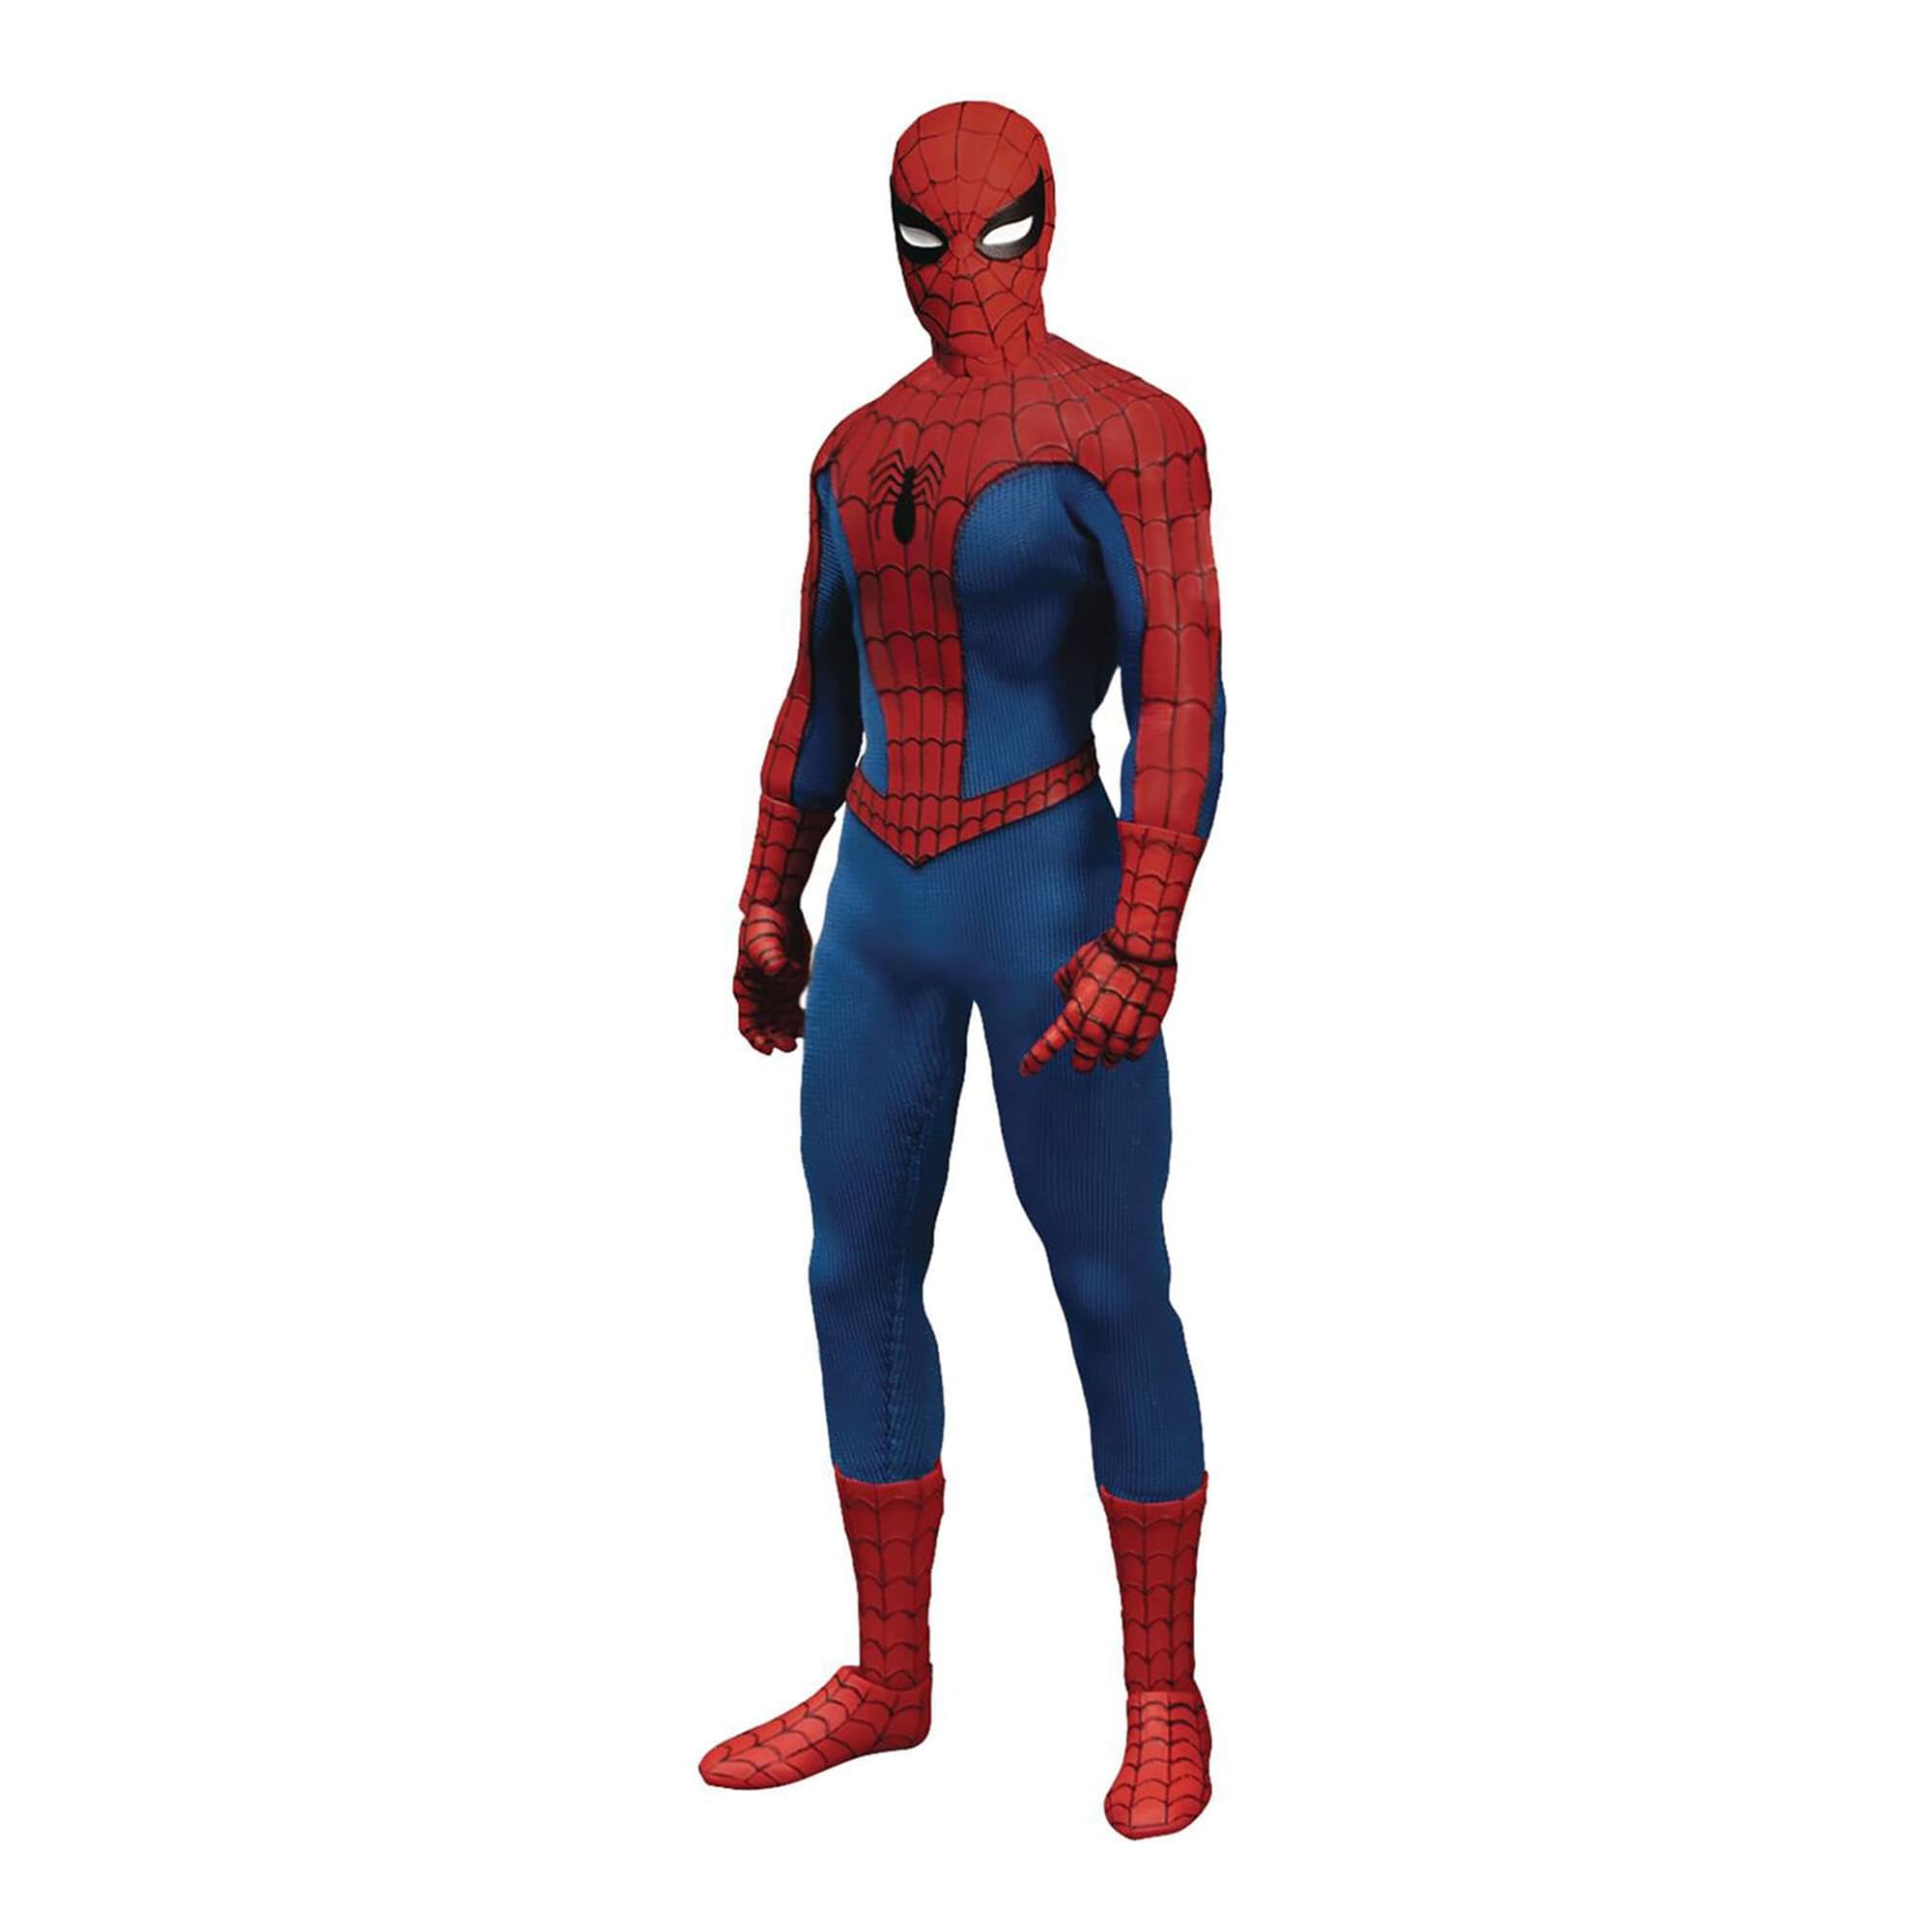 Mezco The Amazing Spider-Man Action- Figur One:12 Deluxe Edition Detailreiche Actionfigur aus Kunststoff